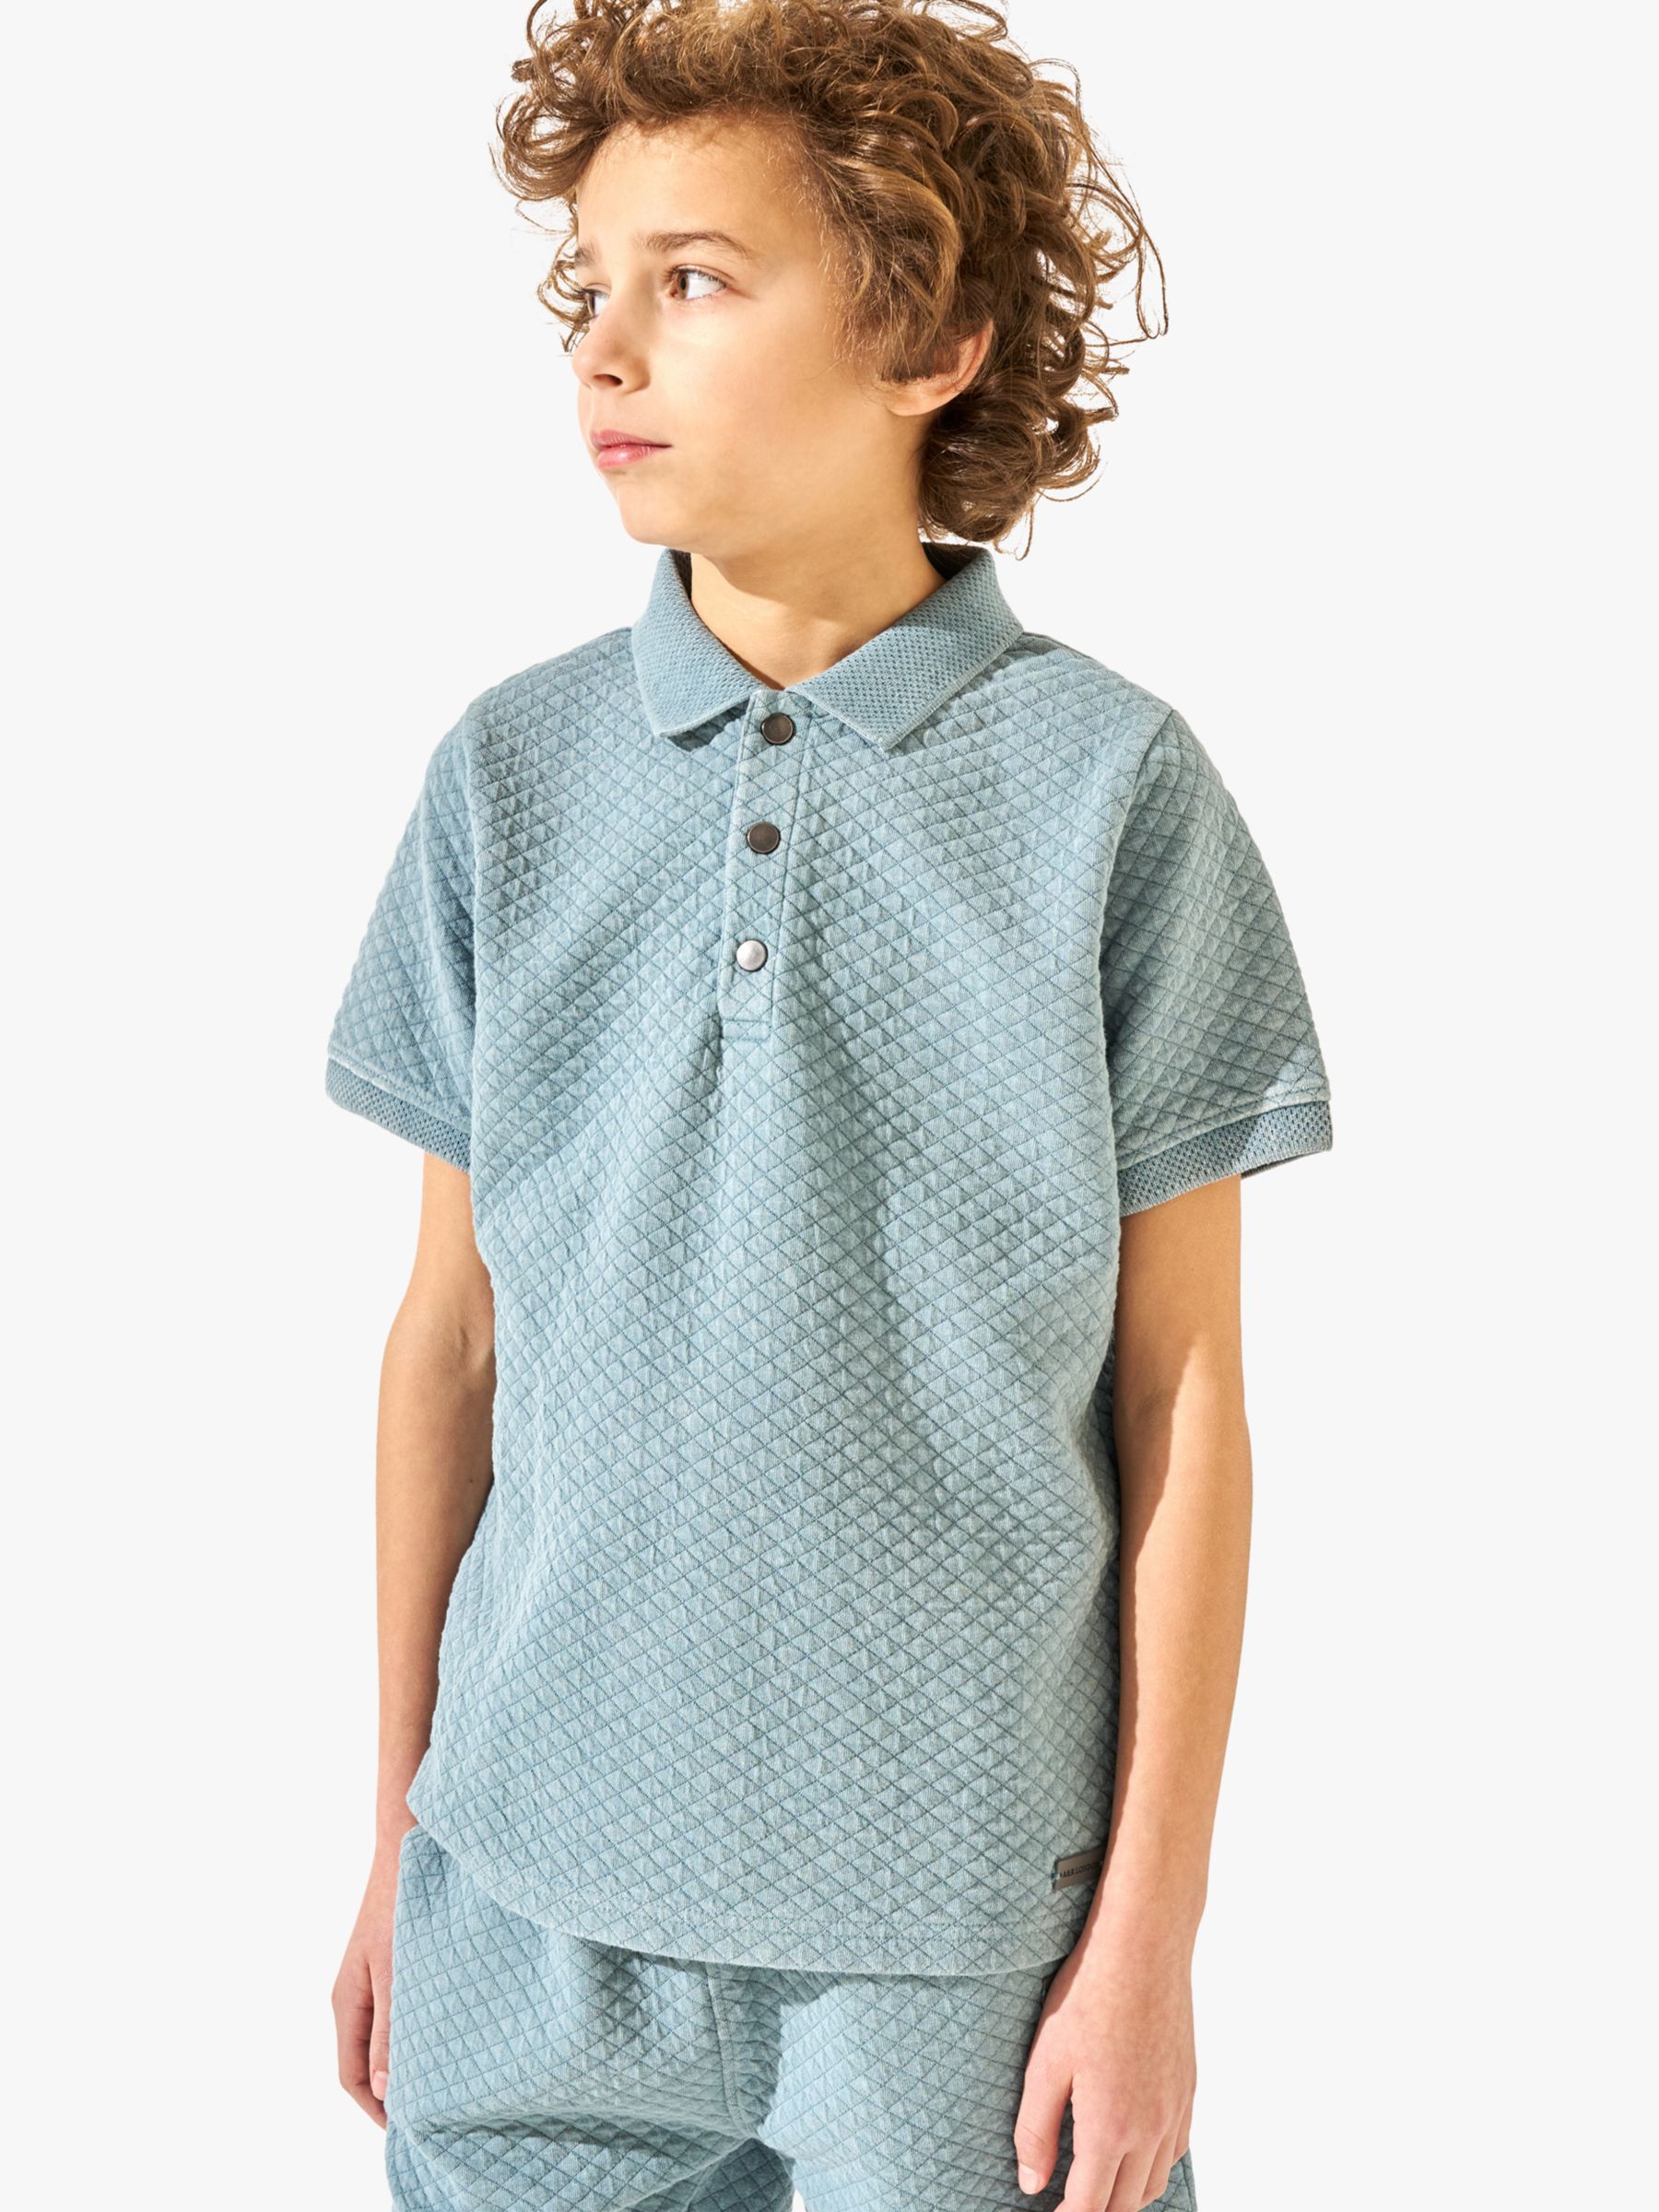 Angel & Rocket Kids' Rex Jersey Textured Wash Polo Shirt, Blue, 3-4 years